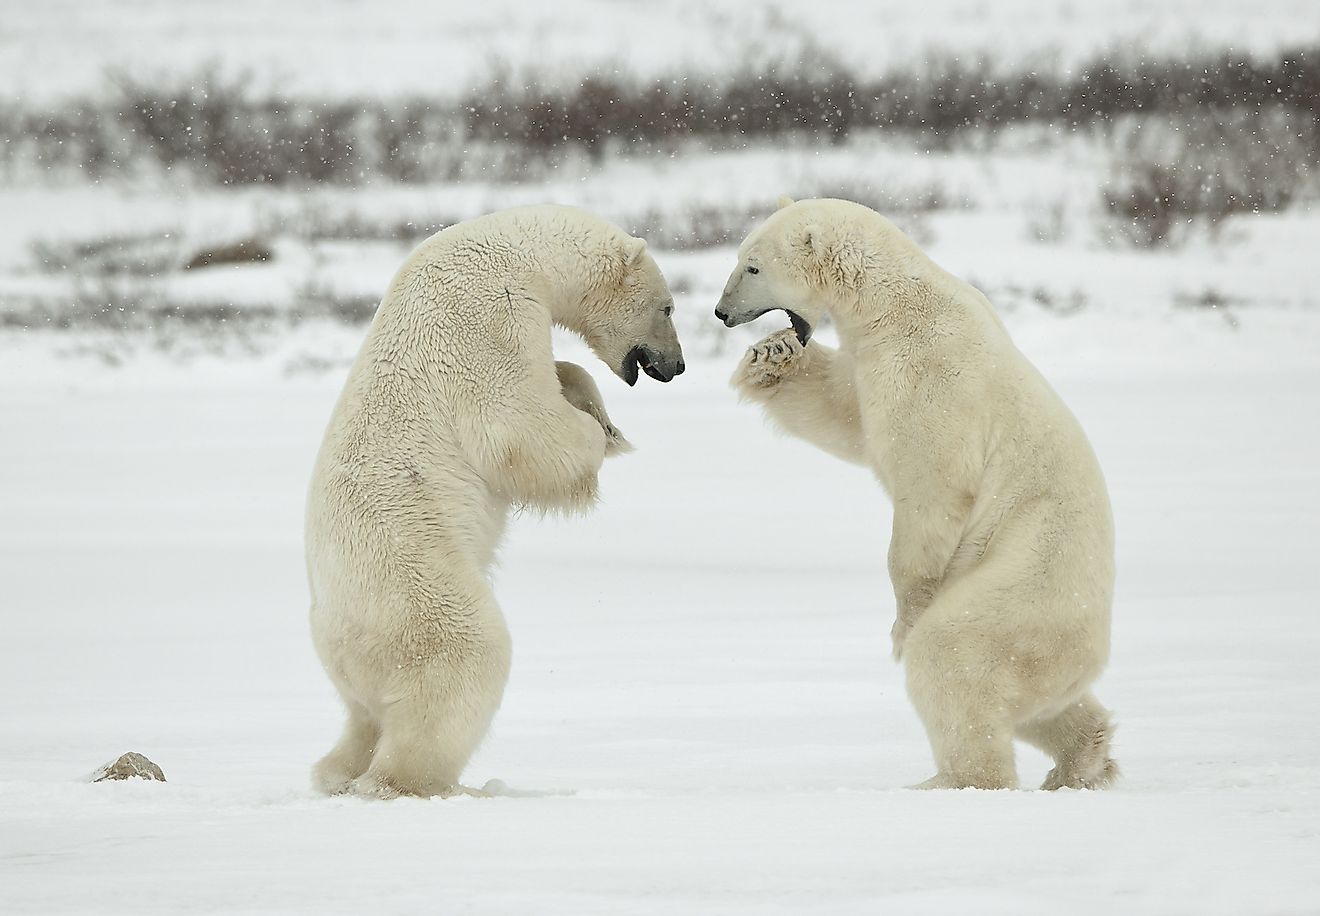 Polar bears in a fighting mode. Image credit: Sergey Uryadnikov/Shutterstock.com